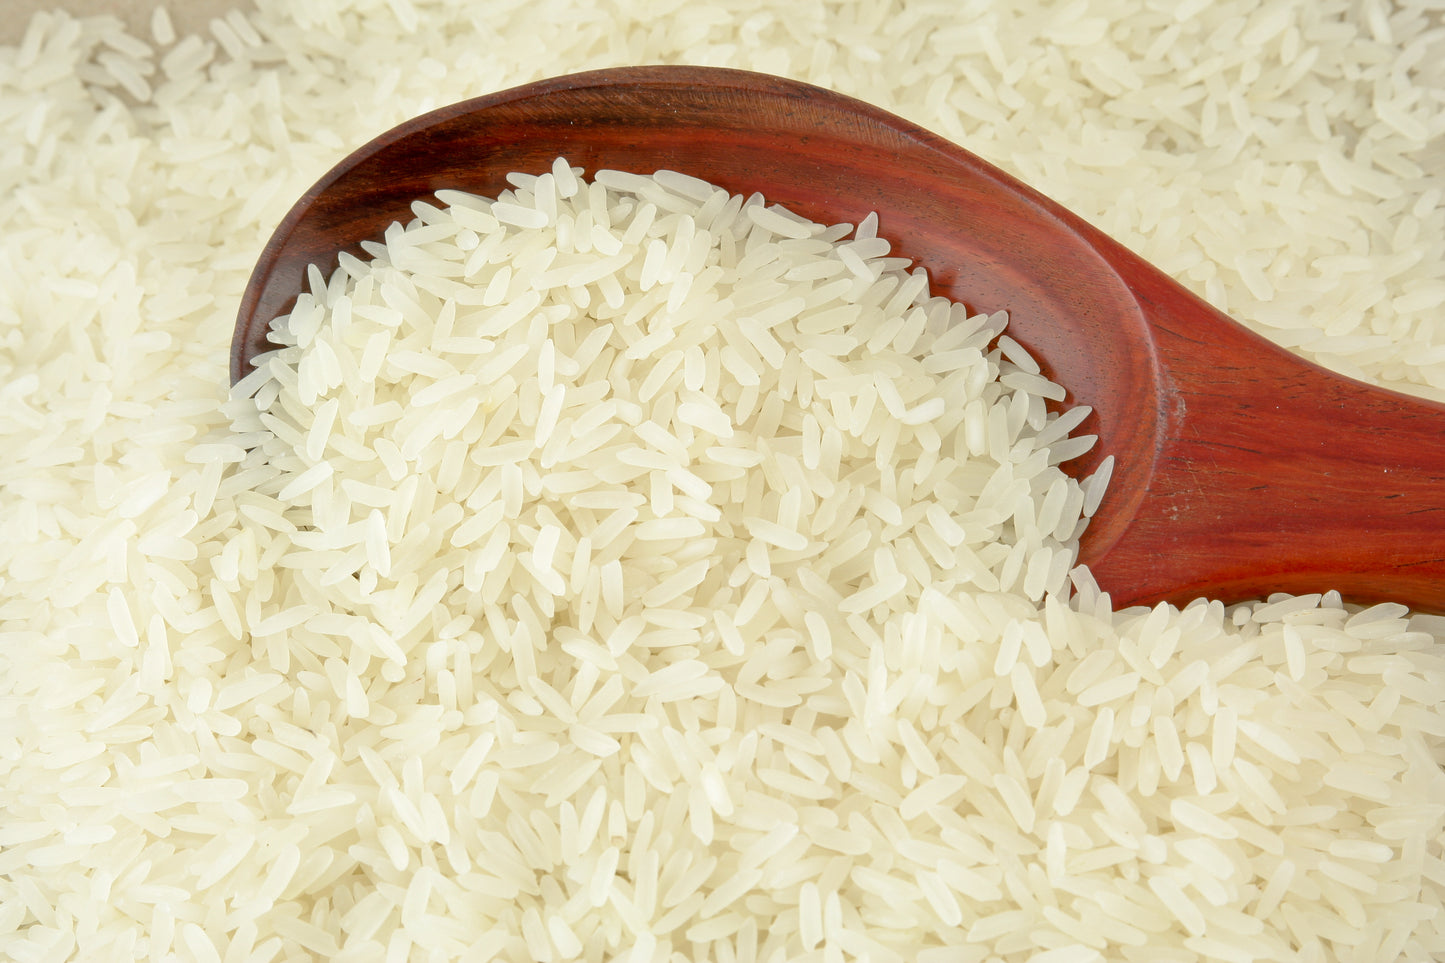 #4116-50lb Jasmine Rice-Asian Taste